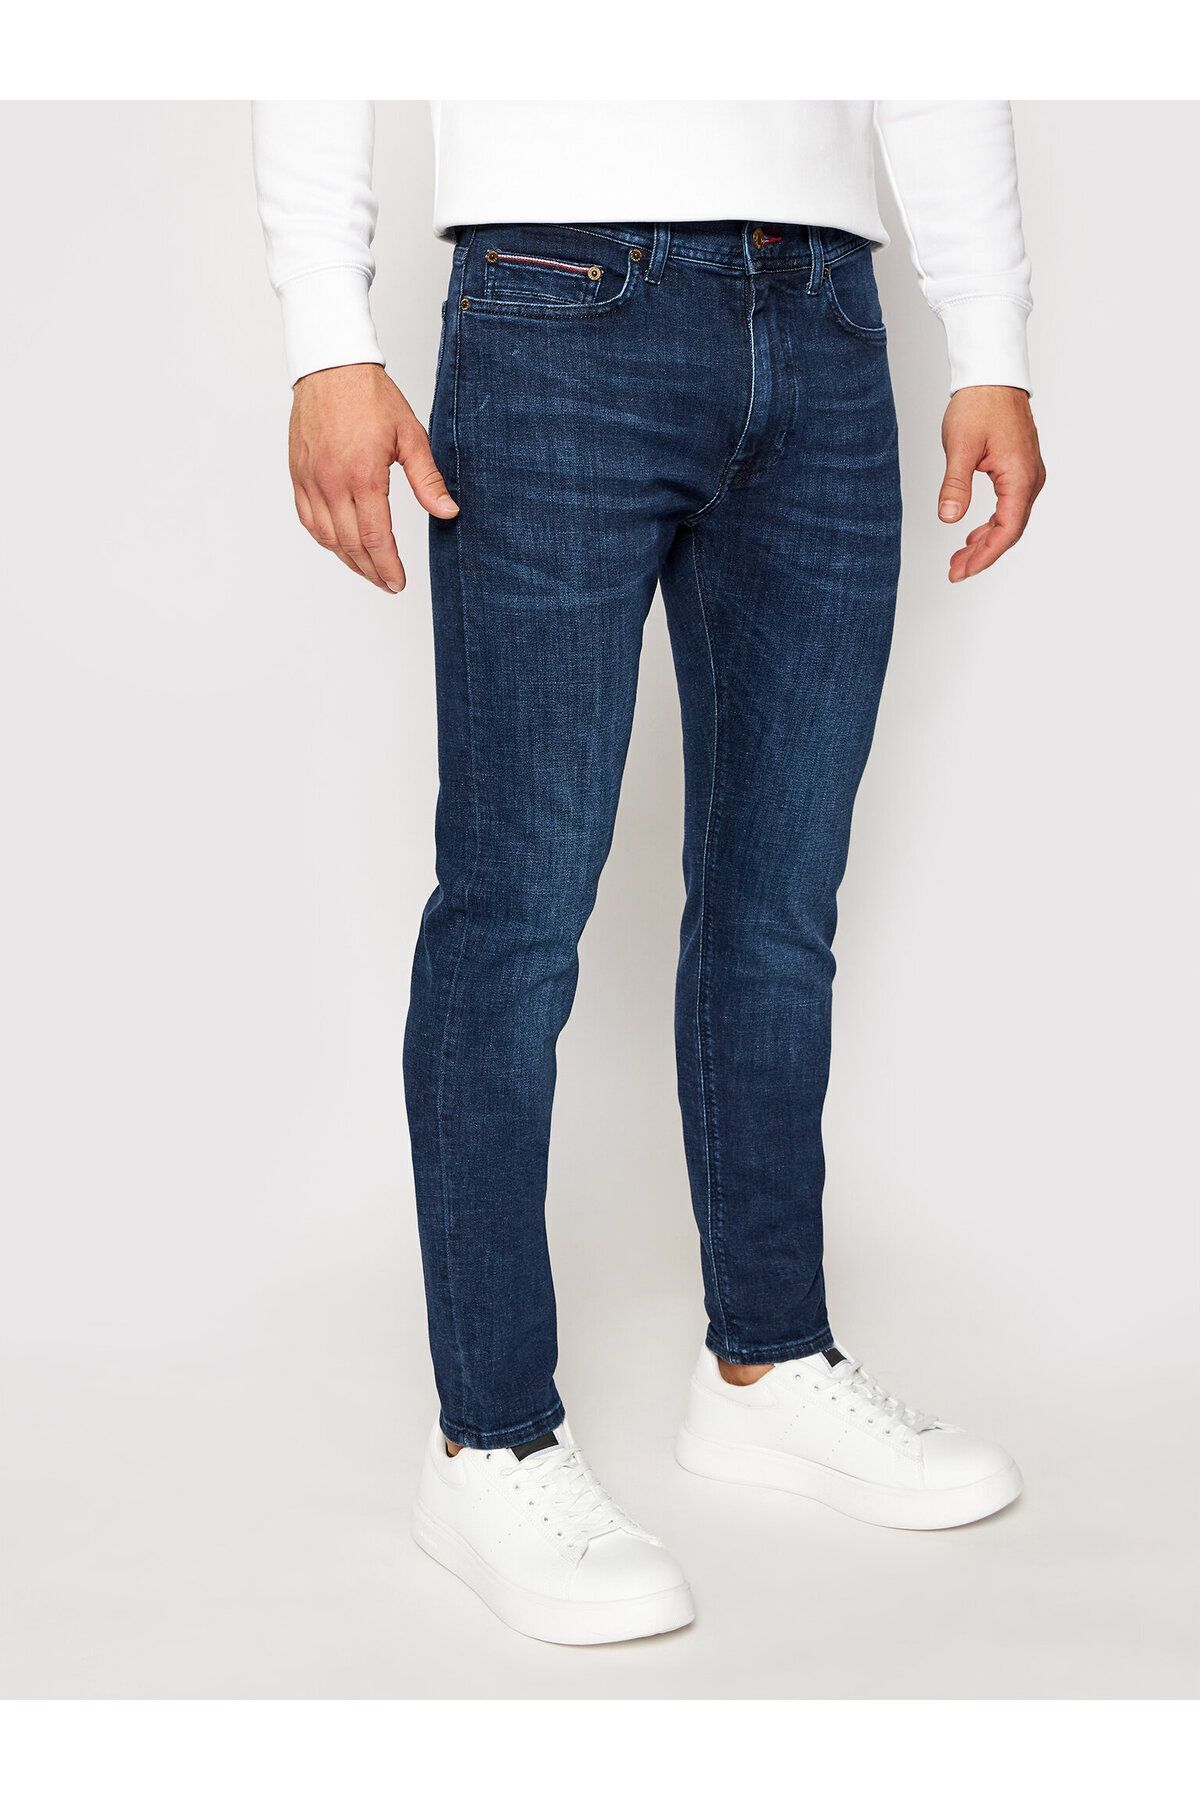 Tommy Hilfiger Erkek Denim Normal Belli Düz Model Günlük Kullanım Mavi Jeans MW0MW15599-1BS